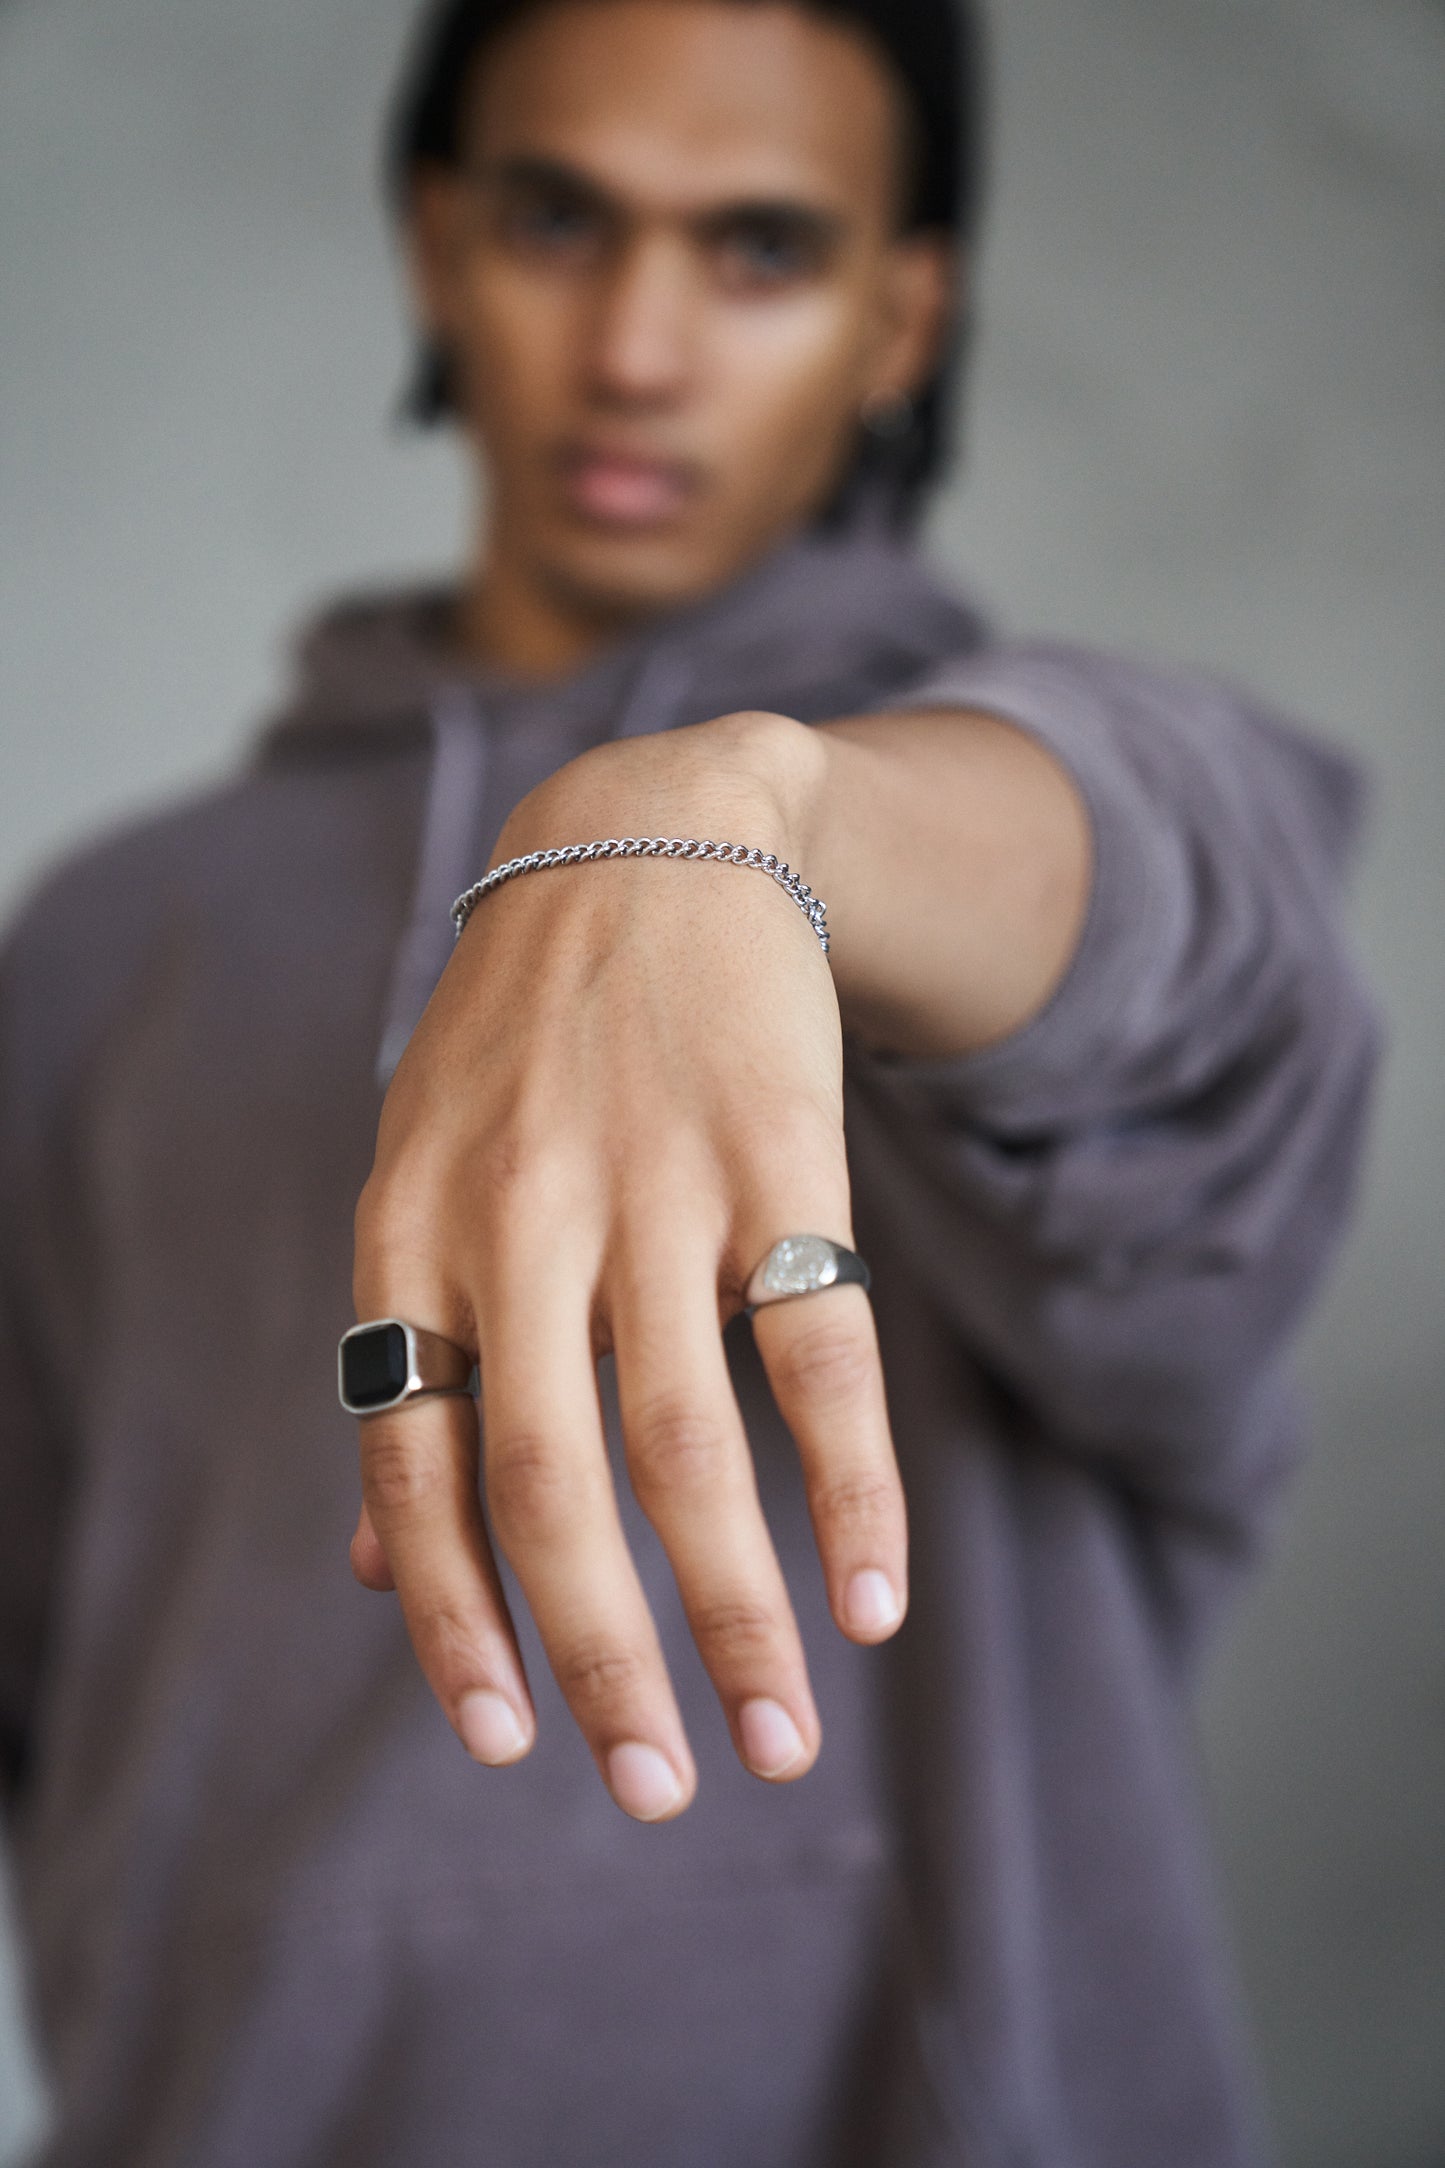 Men's Rings: Gold, Silver, & Black Rings | JAXXON